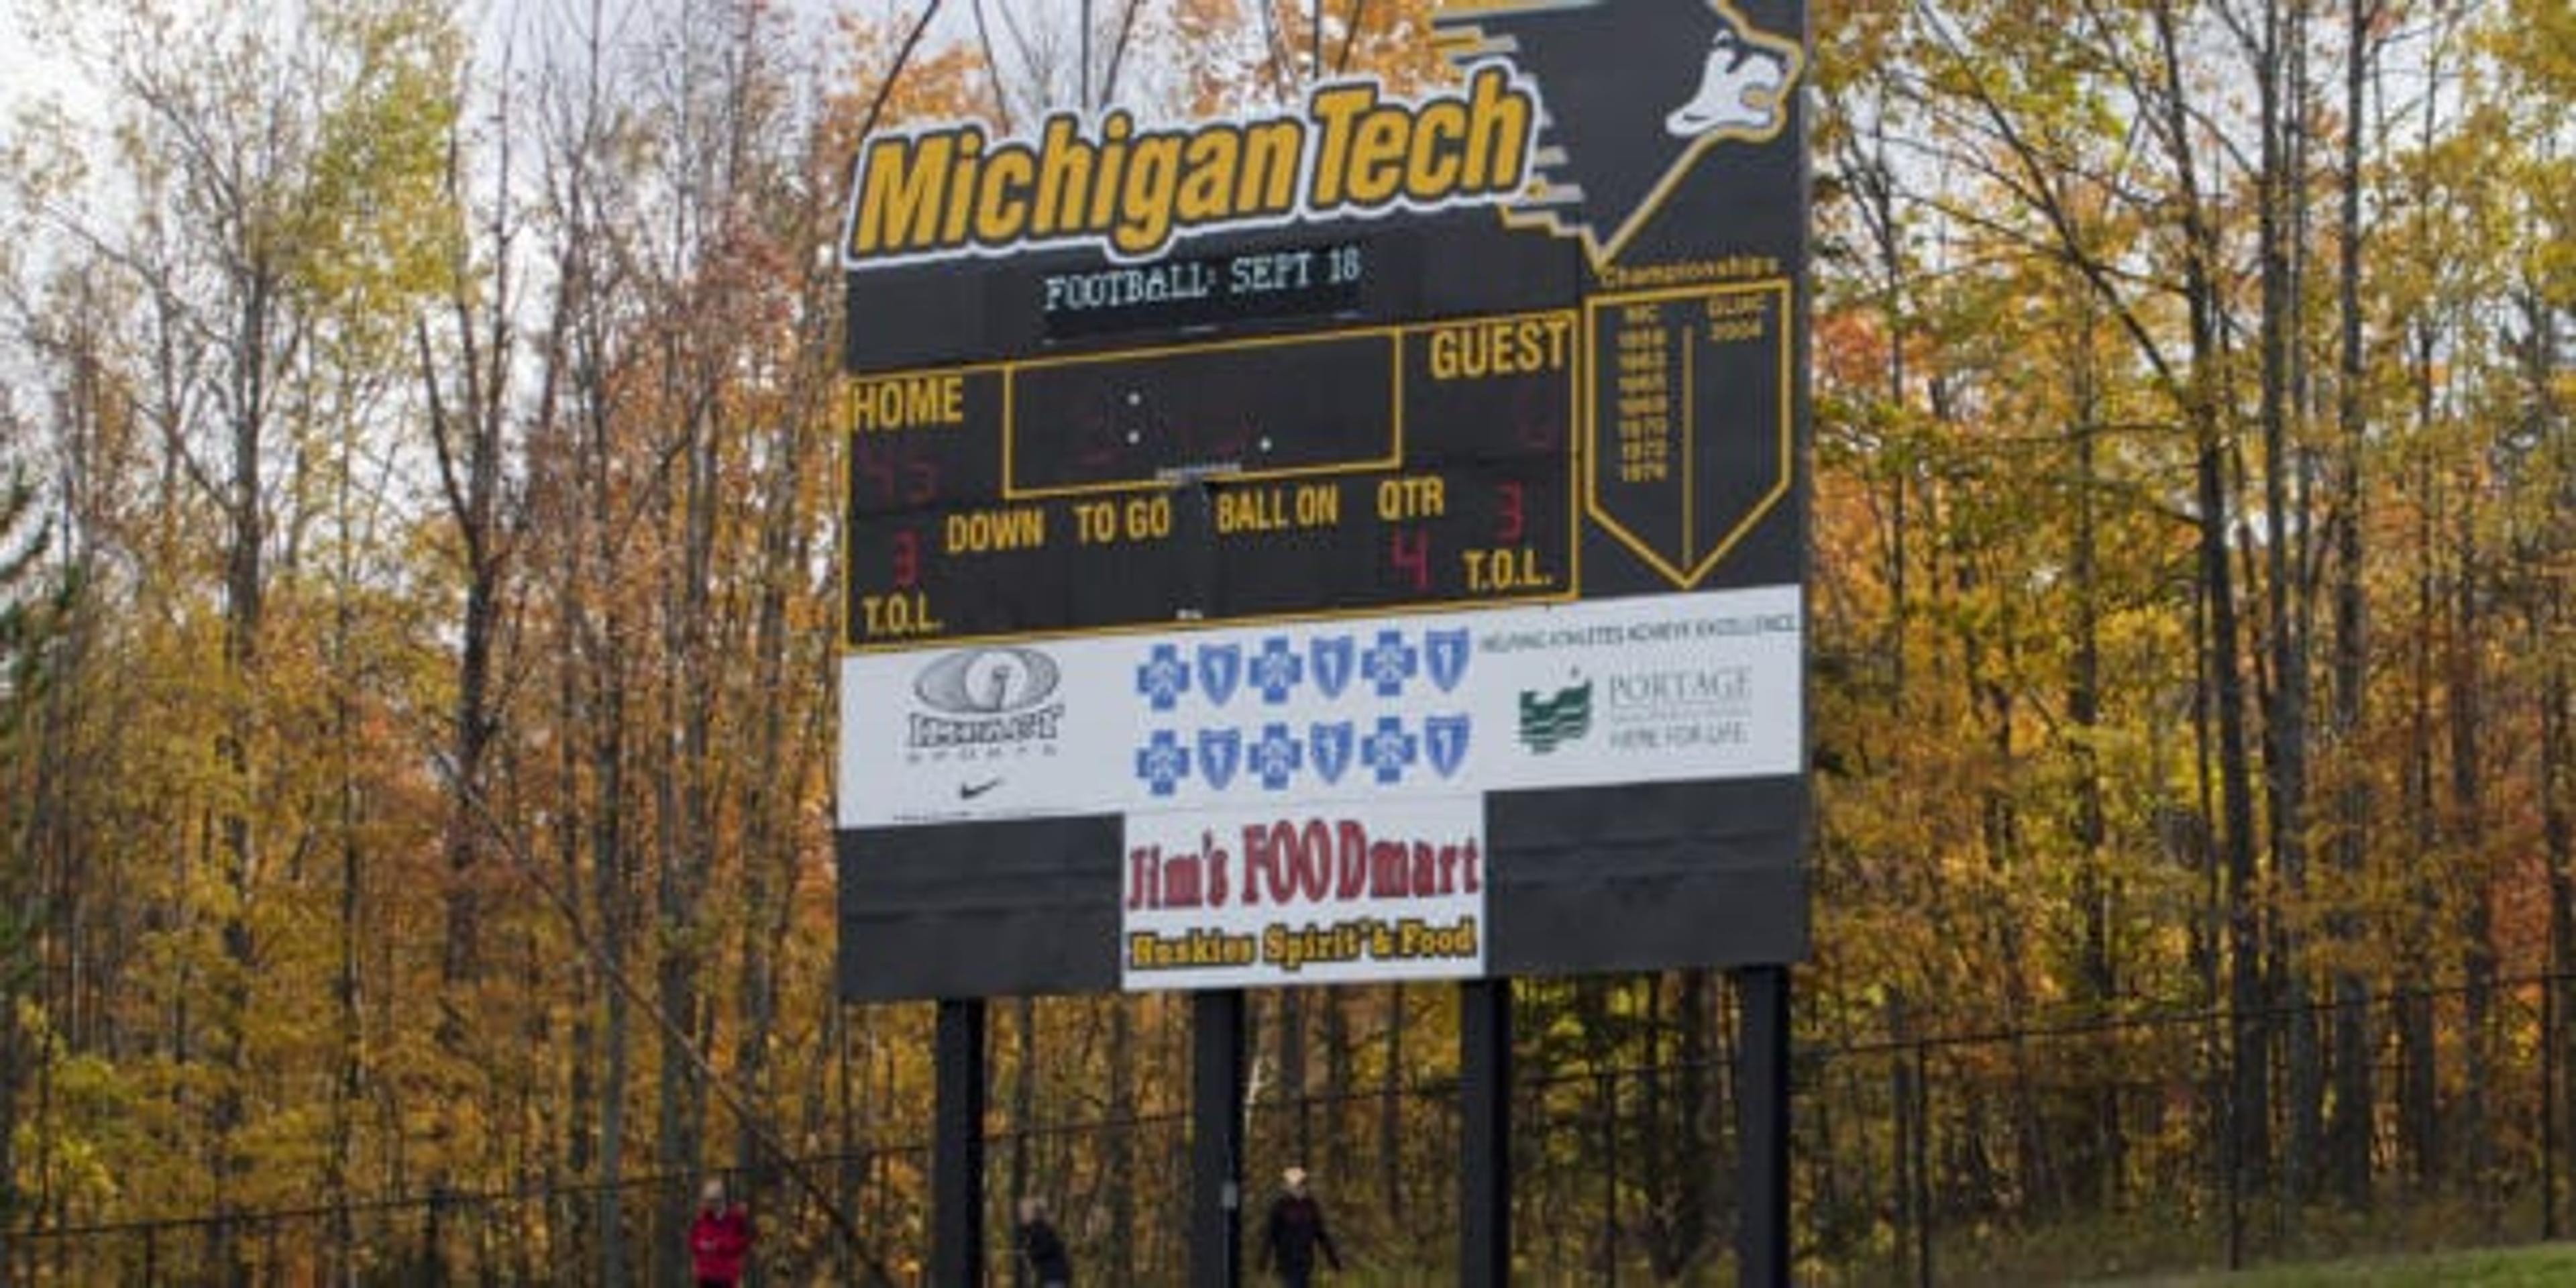 Michigan tech football field in the fall.